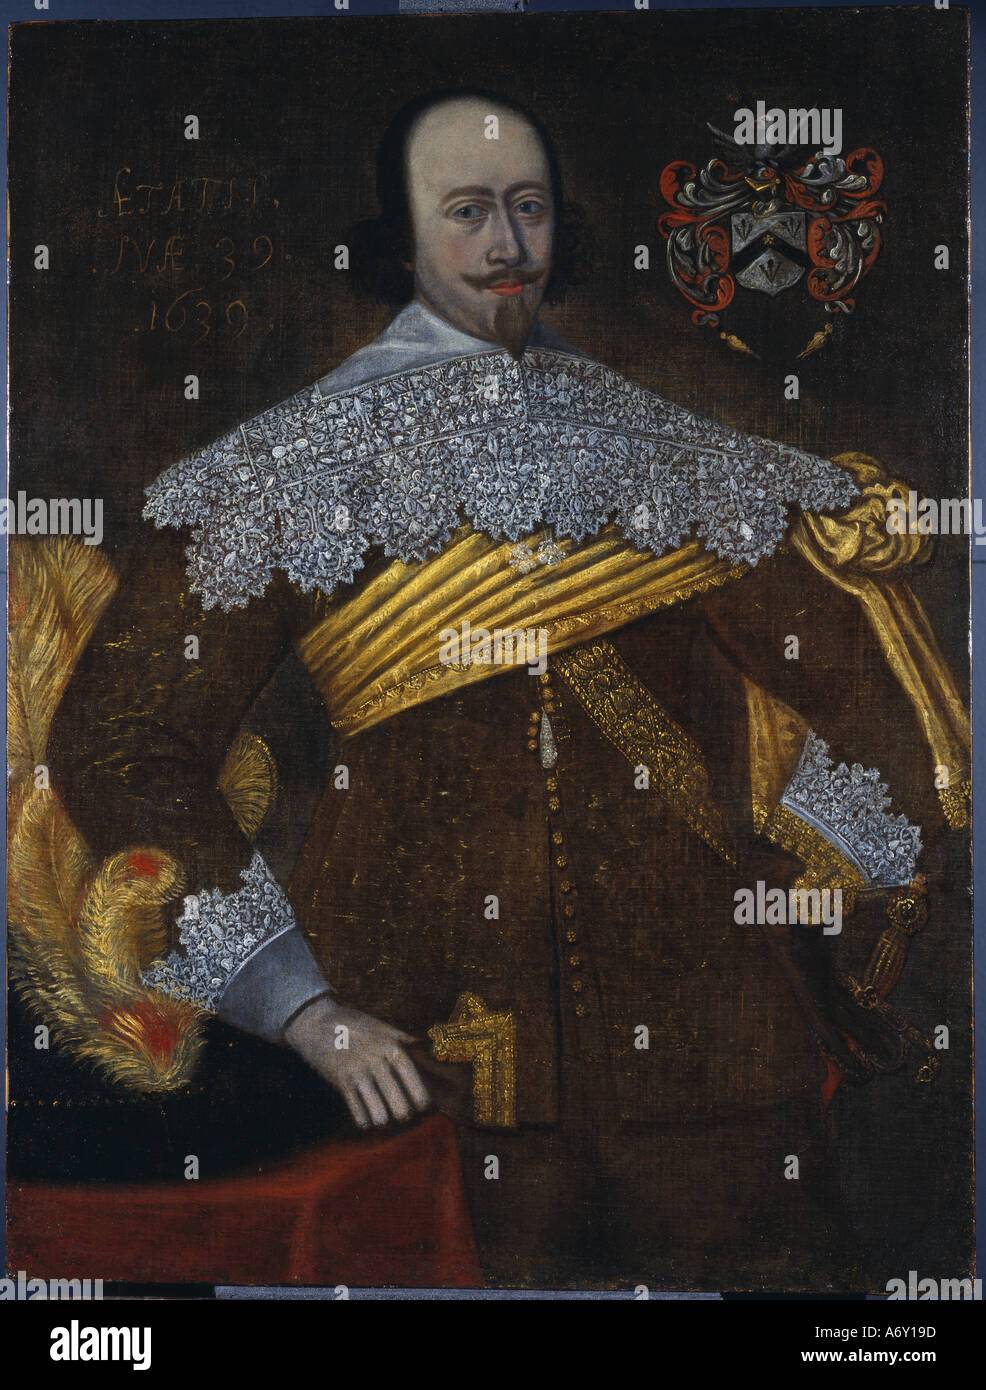 Captain Smart. England, 17th century. Stock Photo